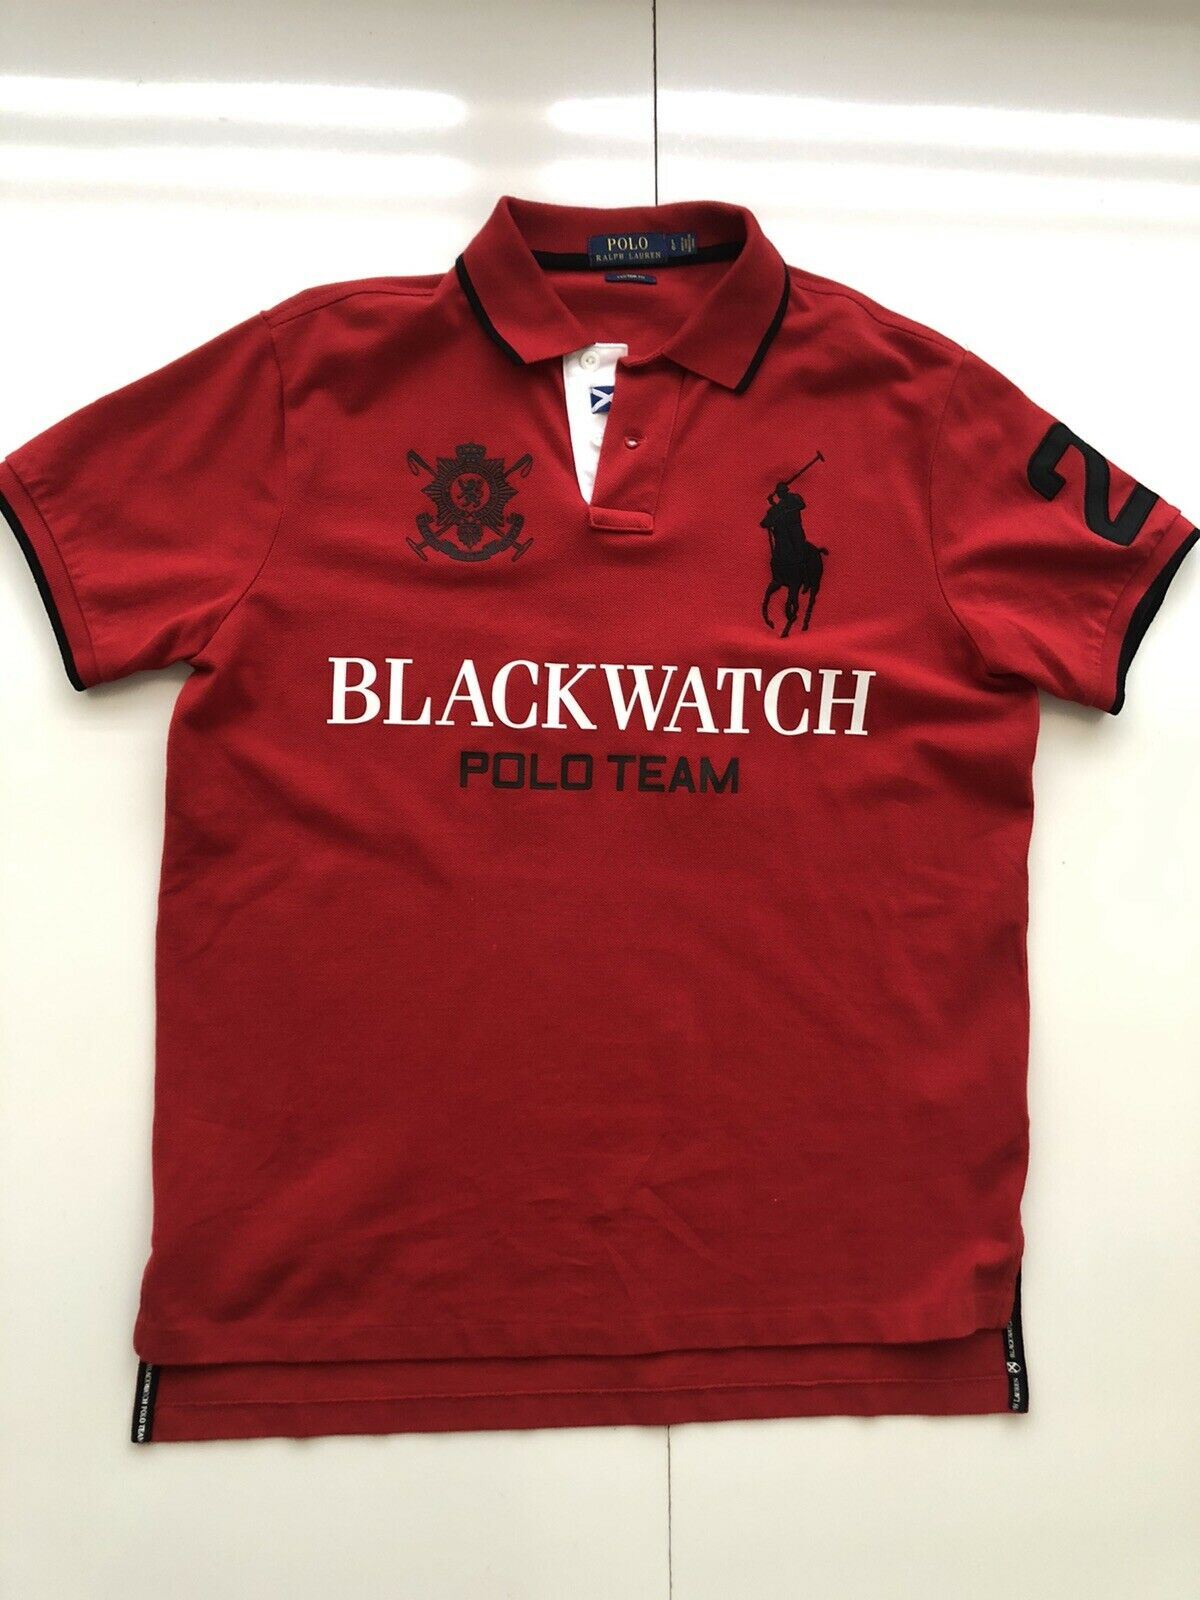 Polo Ralph Lauren Blackwatch Red Polo Custom Fit Shirt L